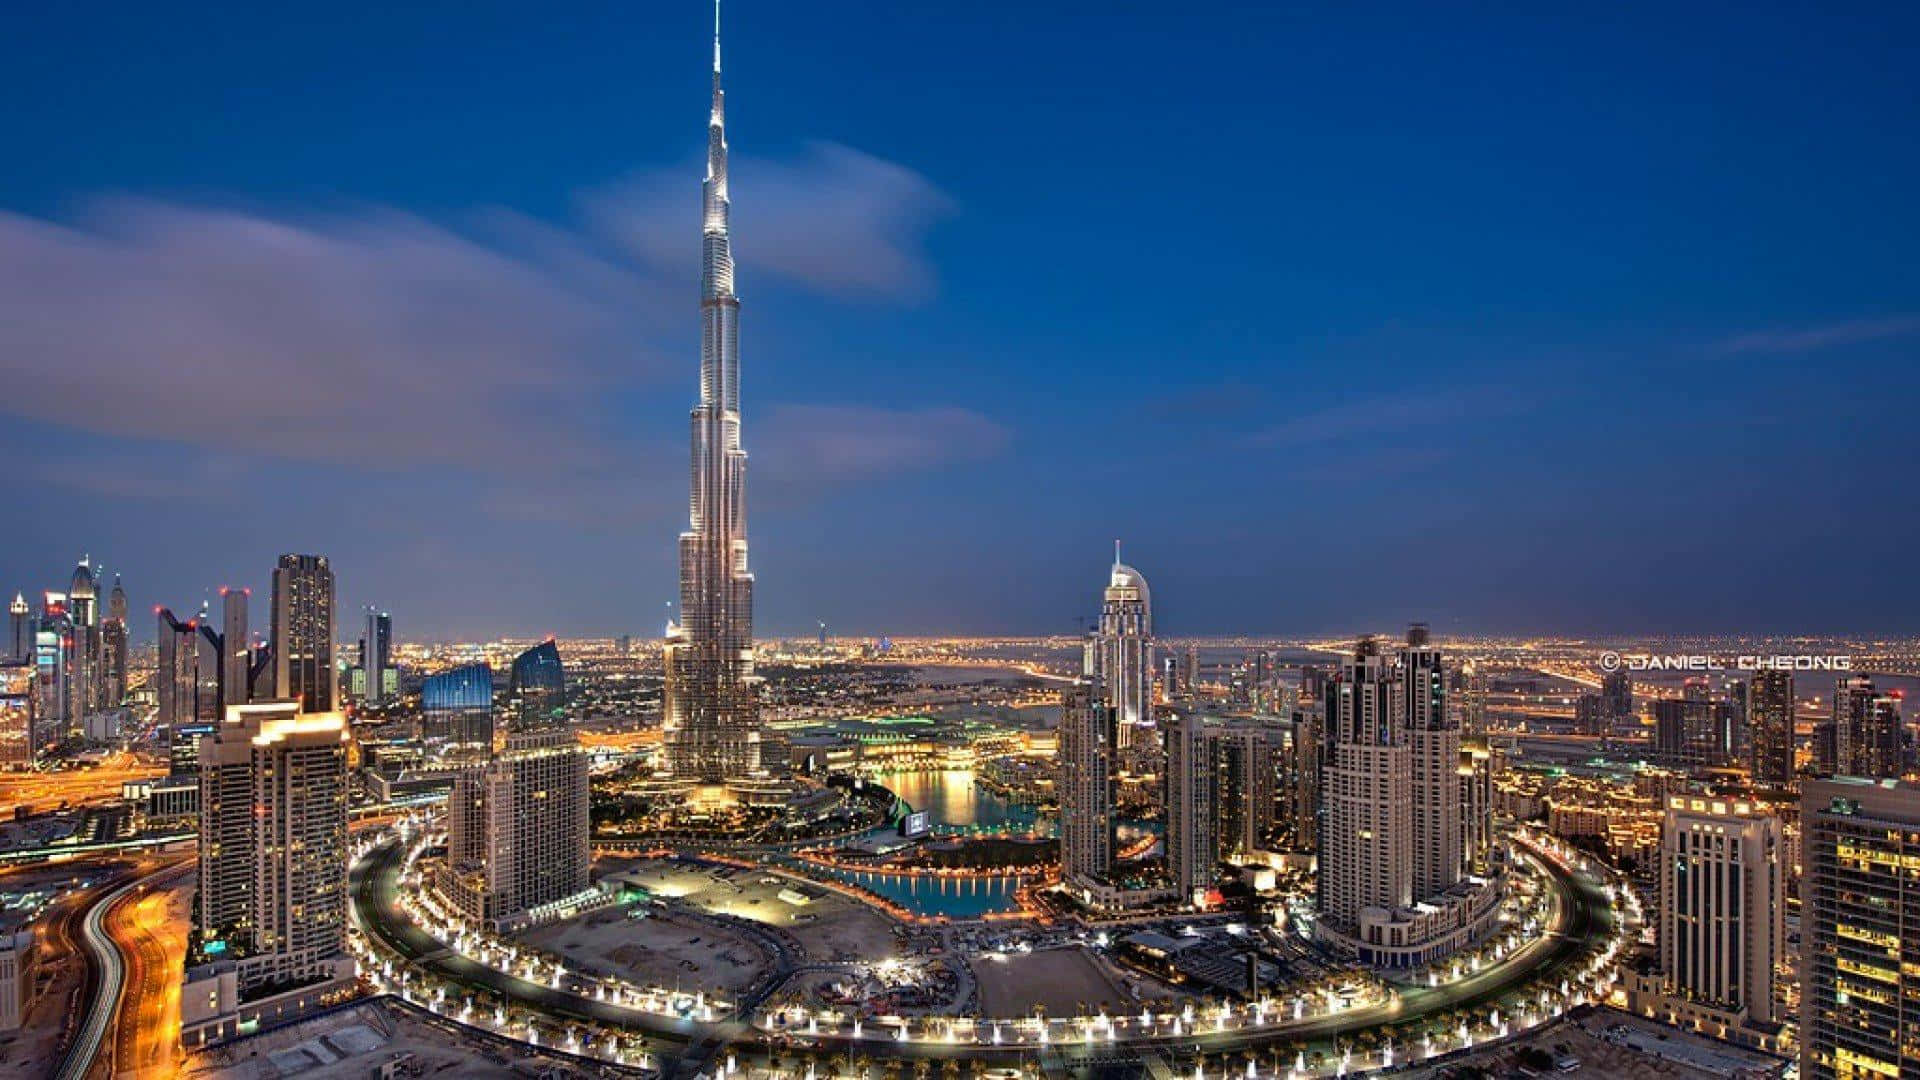 The Burj Khalifa Tower Is Lit Up At Night